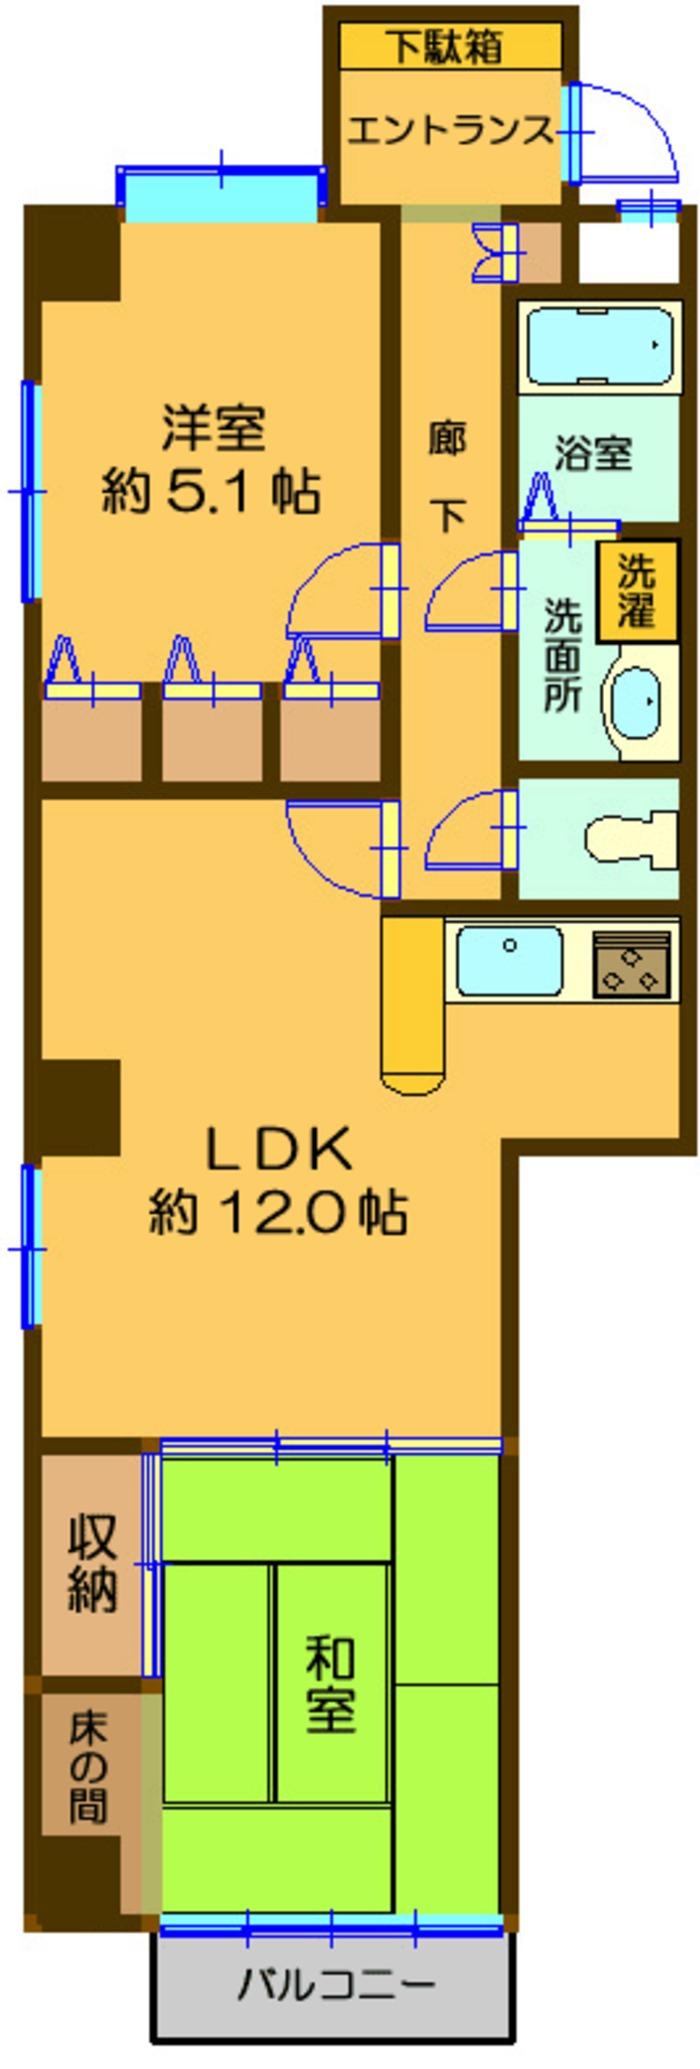 Floor plan. 2LDK, Price 7.8 million yen, Occupied area 59.05 sq m , Balcony area 3 sq m